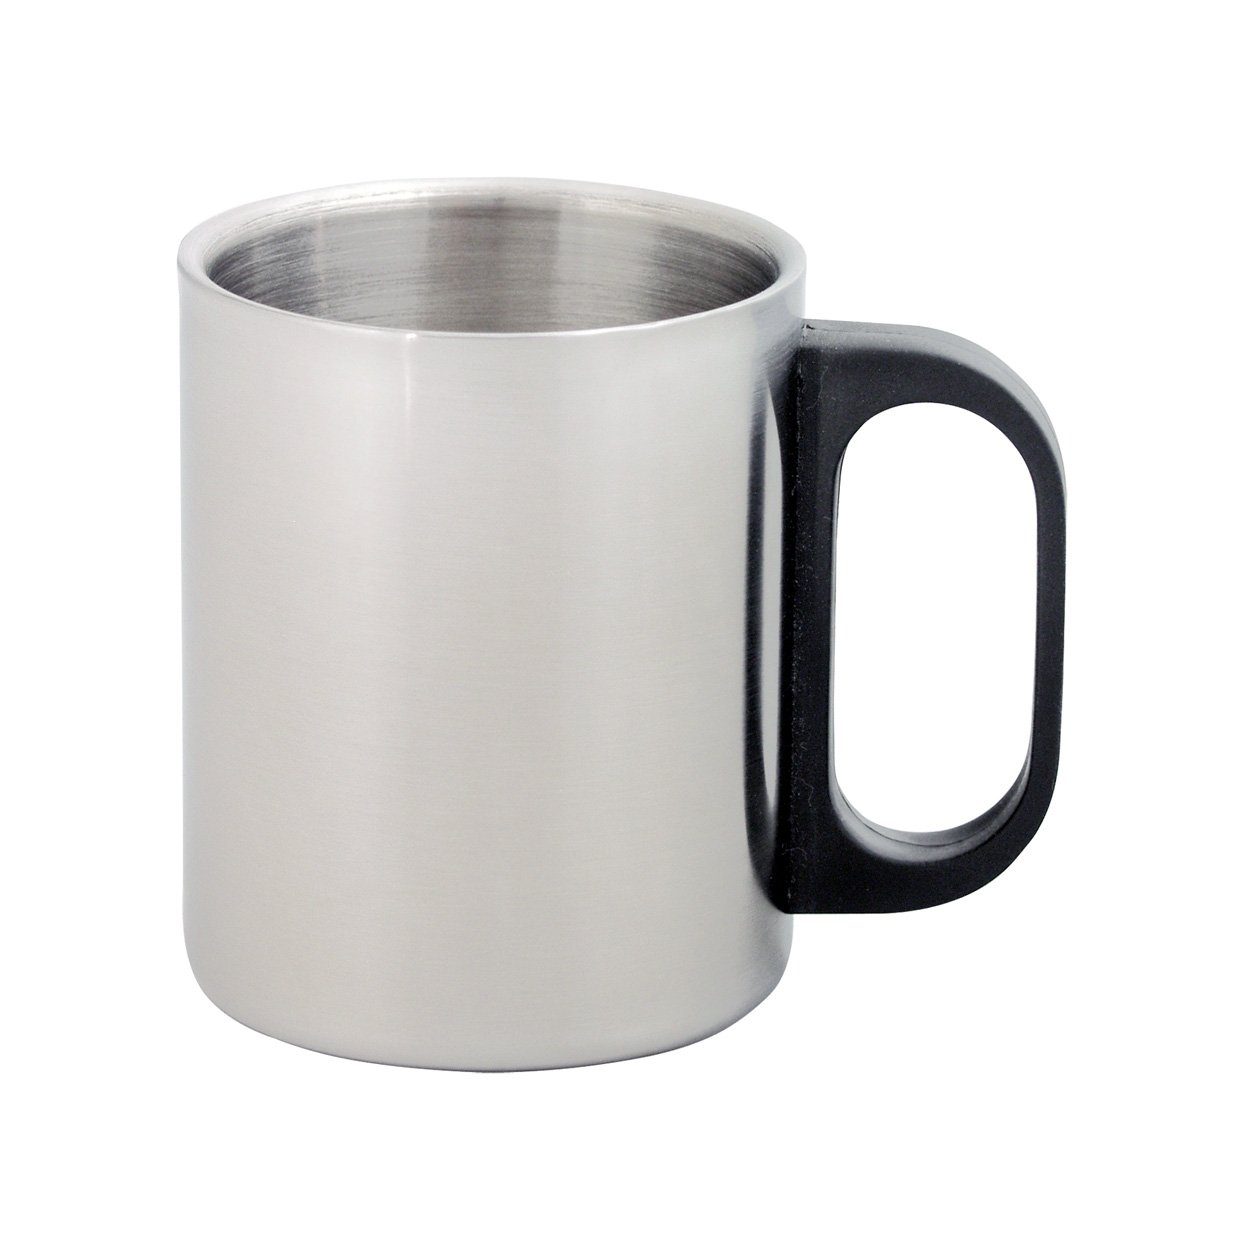 Gilbert stainless steel mug